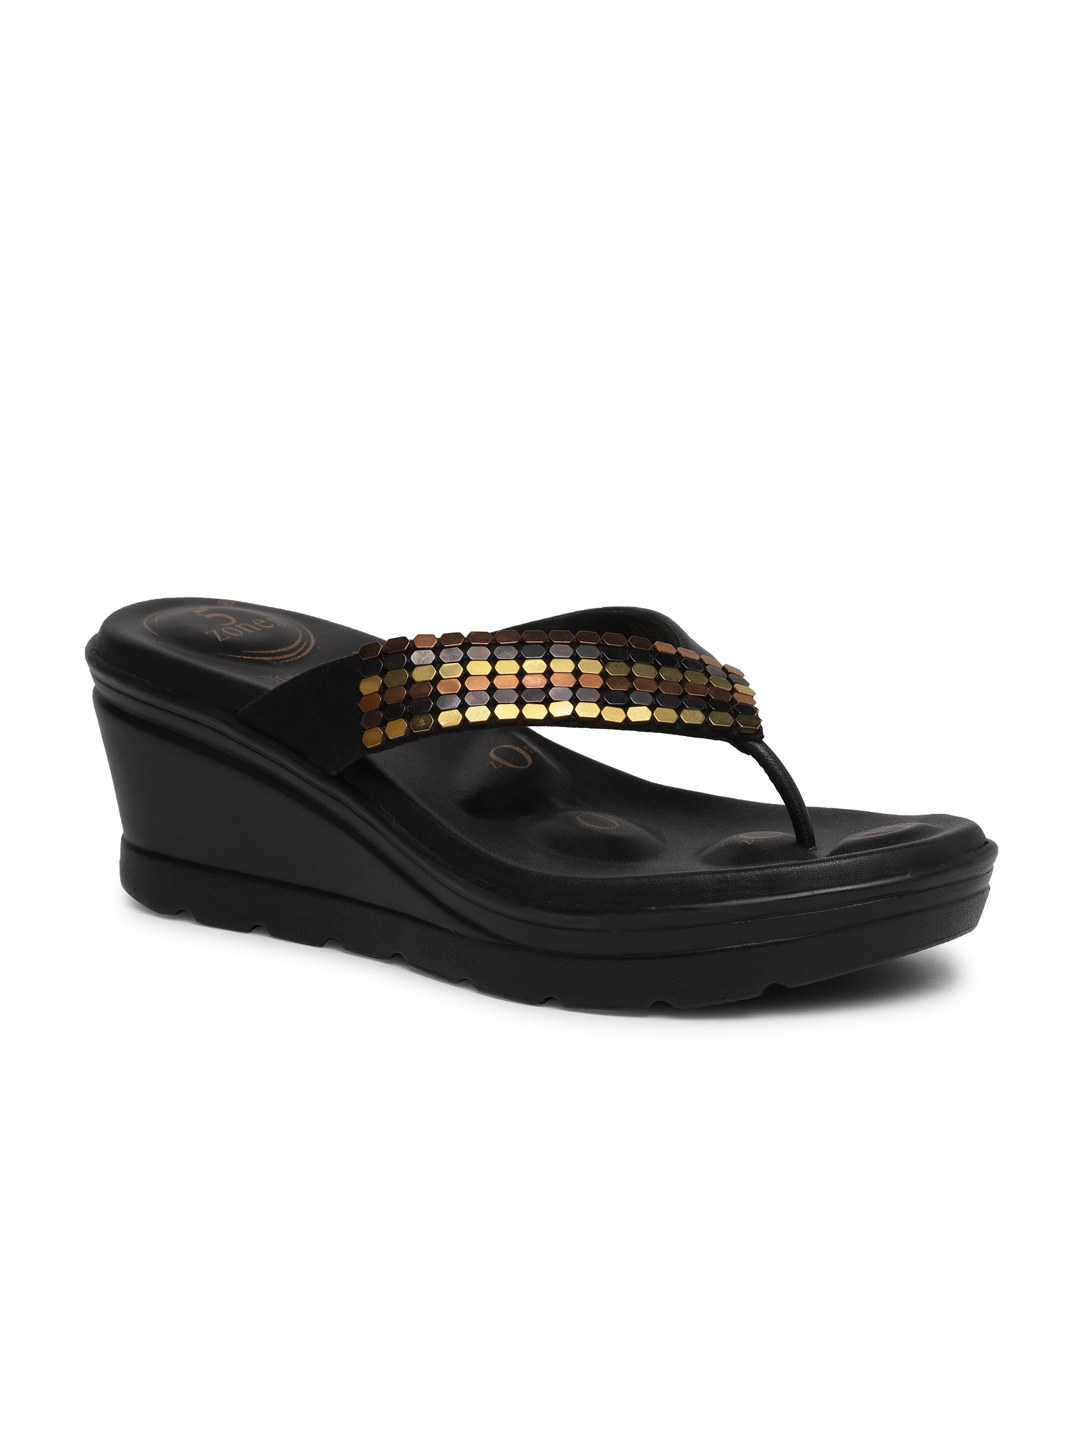 Buy Von Wellx Germany Comfort Women's Black Casual Slippers Karl Online in Kuwait City